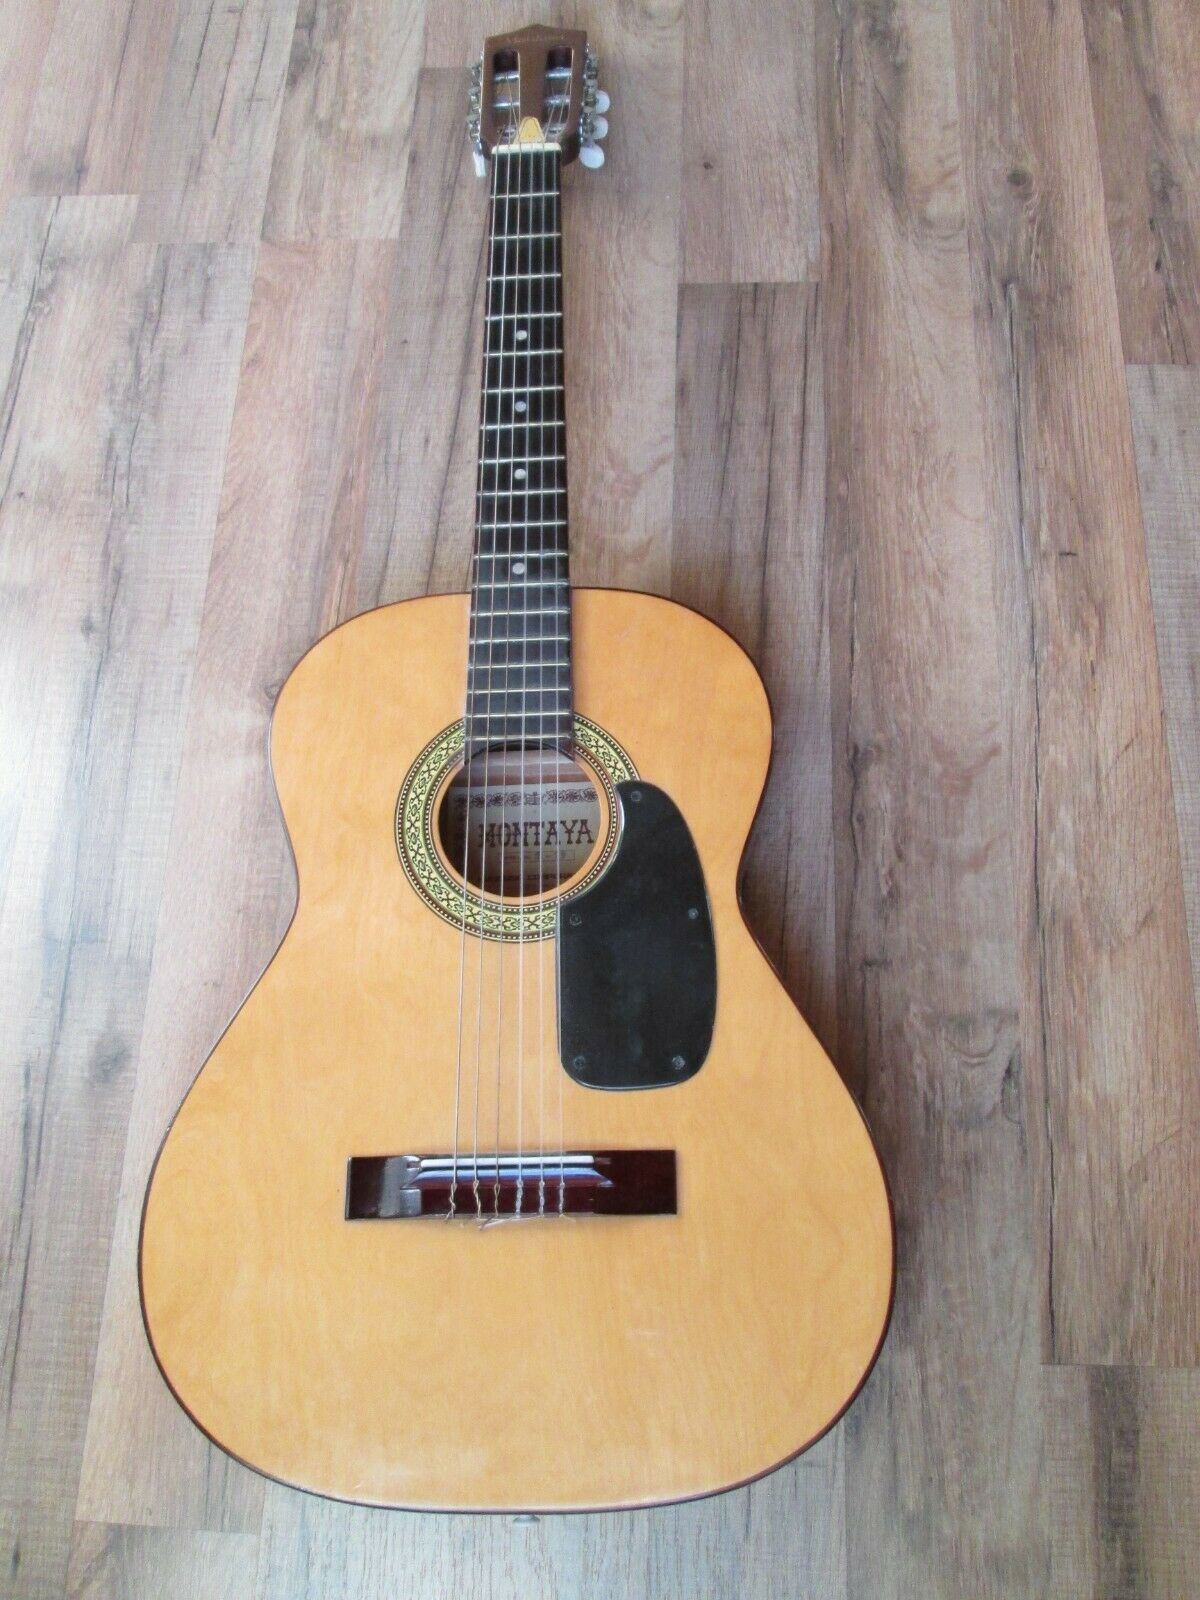 Vintage Montaya S-39  Acoustic Guitar Korean Made  6 String R-hand